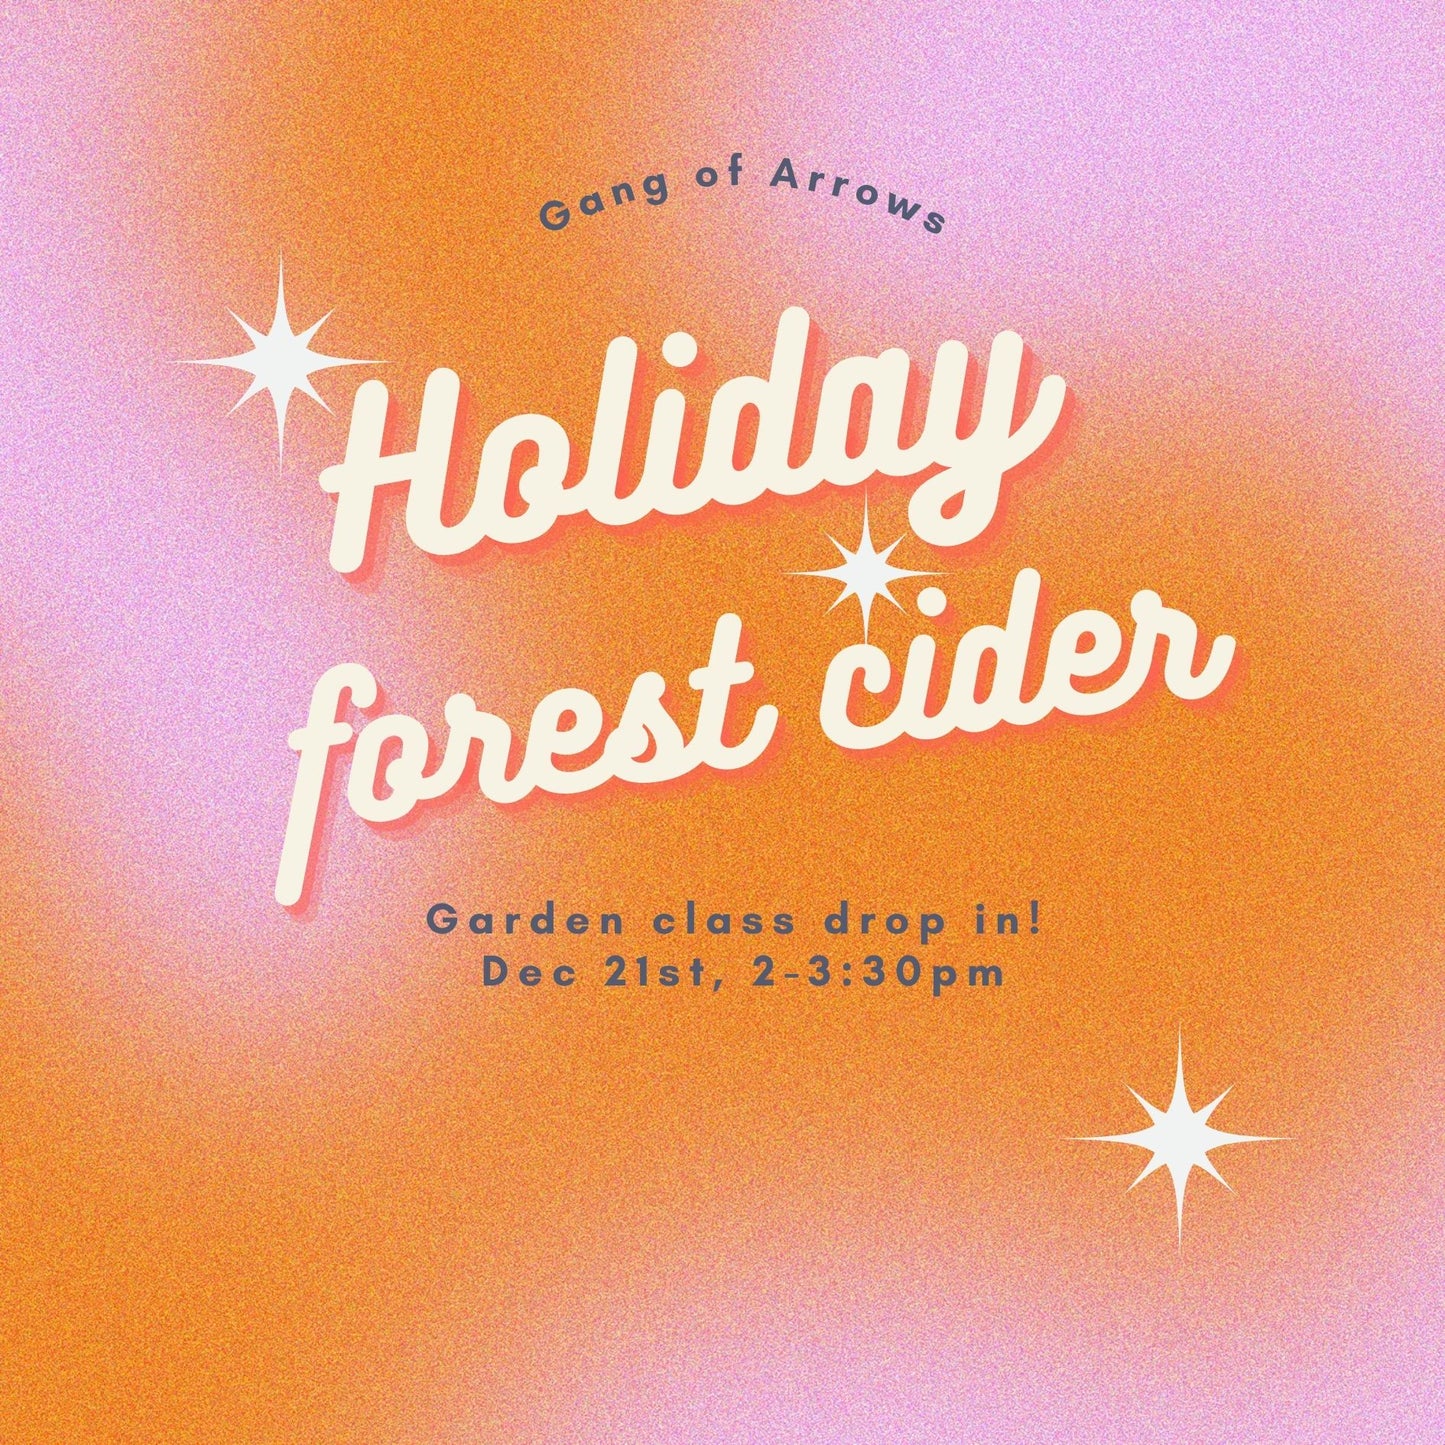 Holiday Forest Cider